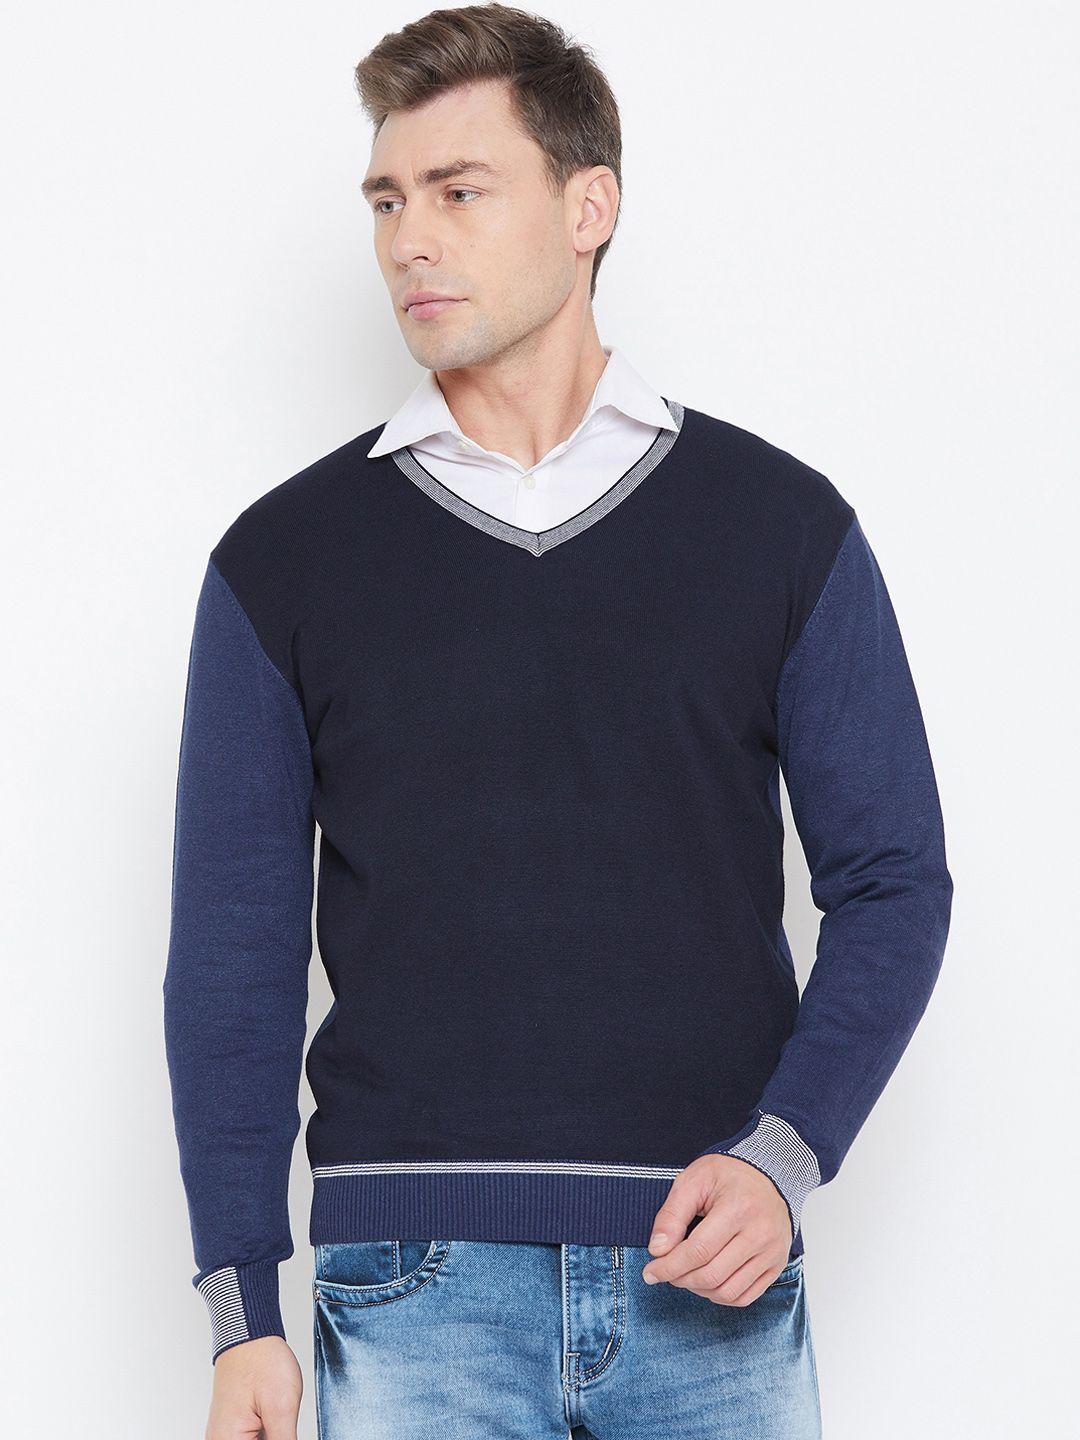 duke men navy blue colourblocked pullover sweater